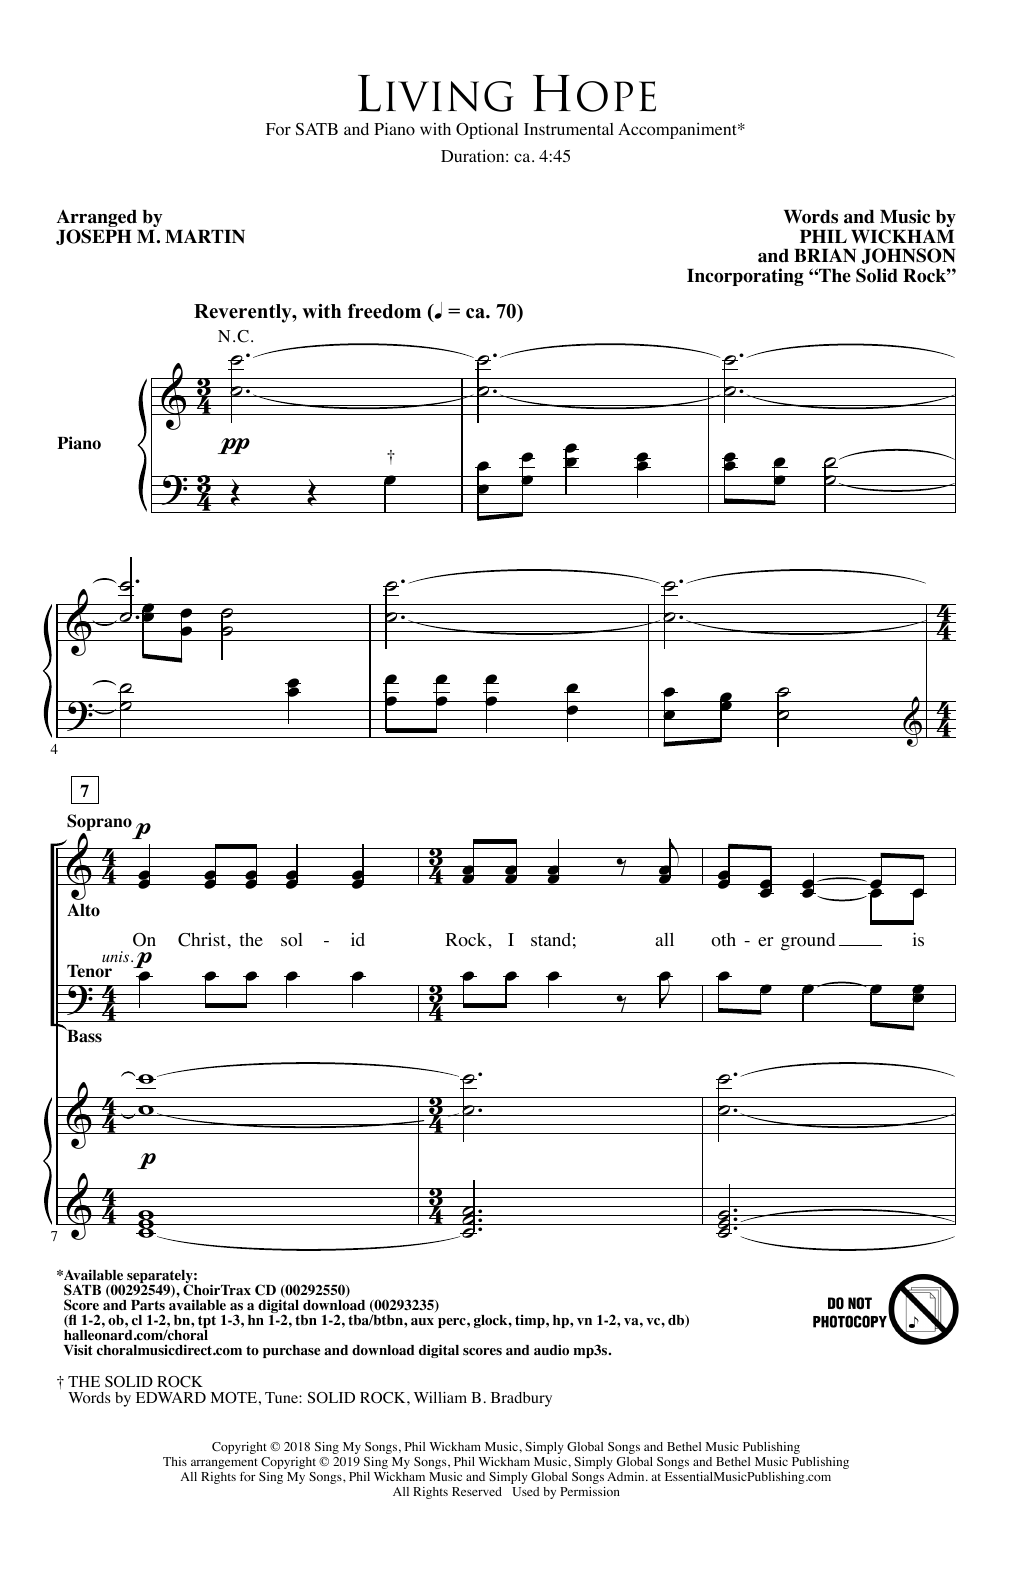 Phil Wickham Living Hope (arr. Joseph M. Martin) Sheet Music Notes & Chords for SATB Choir - Download or Print PDF